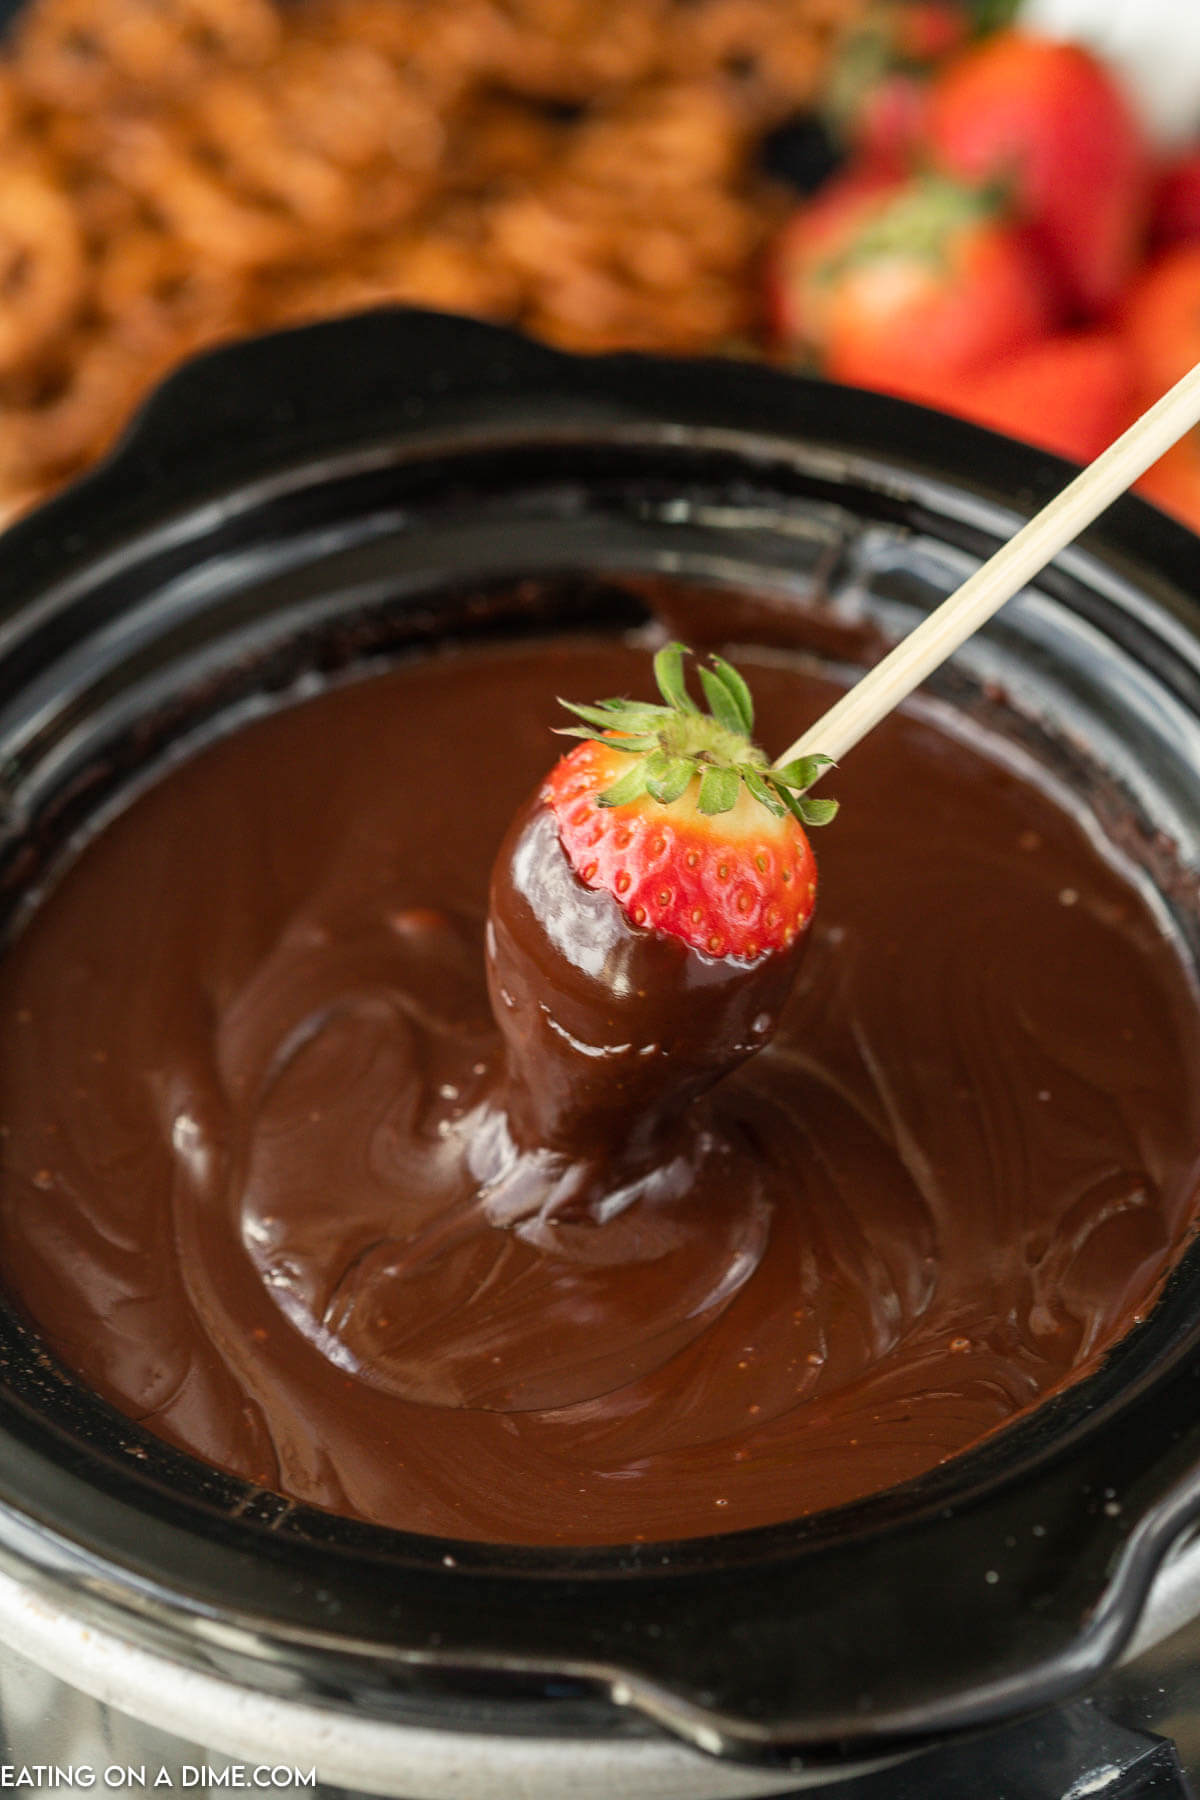 Slow Cooker Chocolate Fondue Recipe